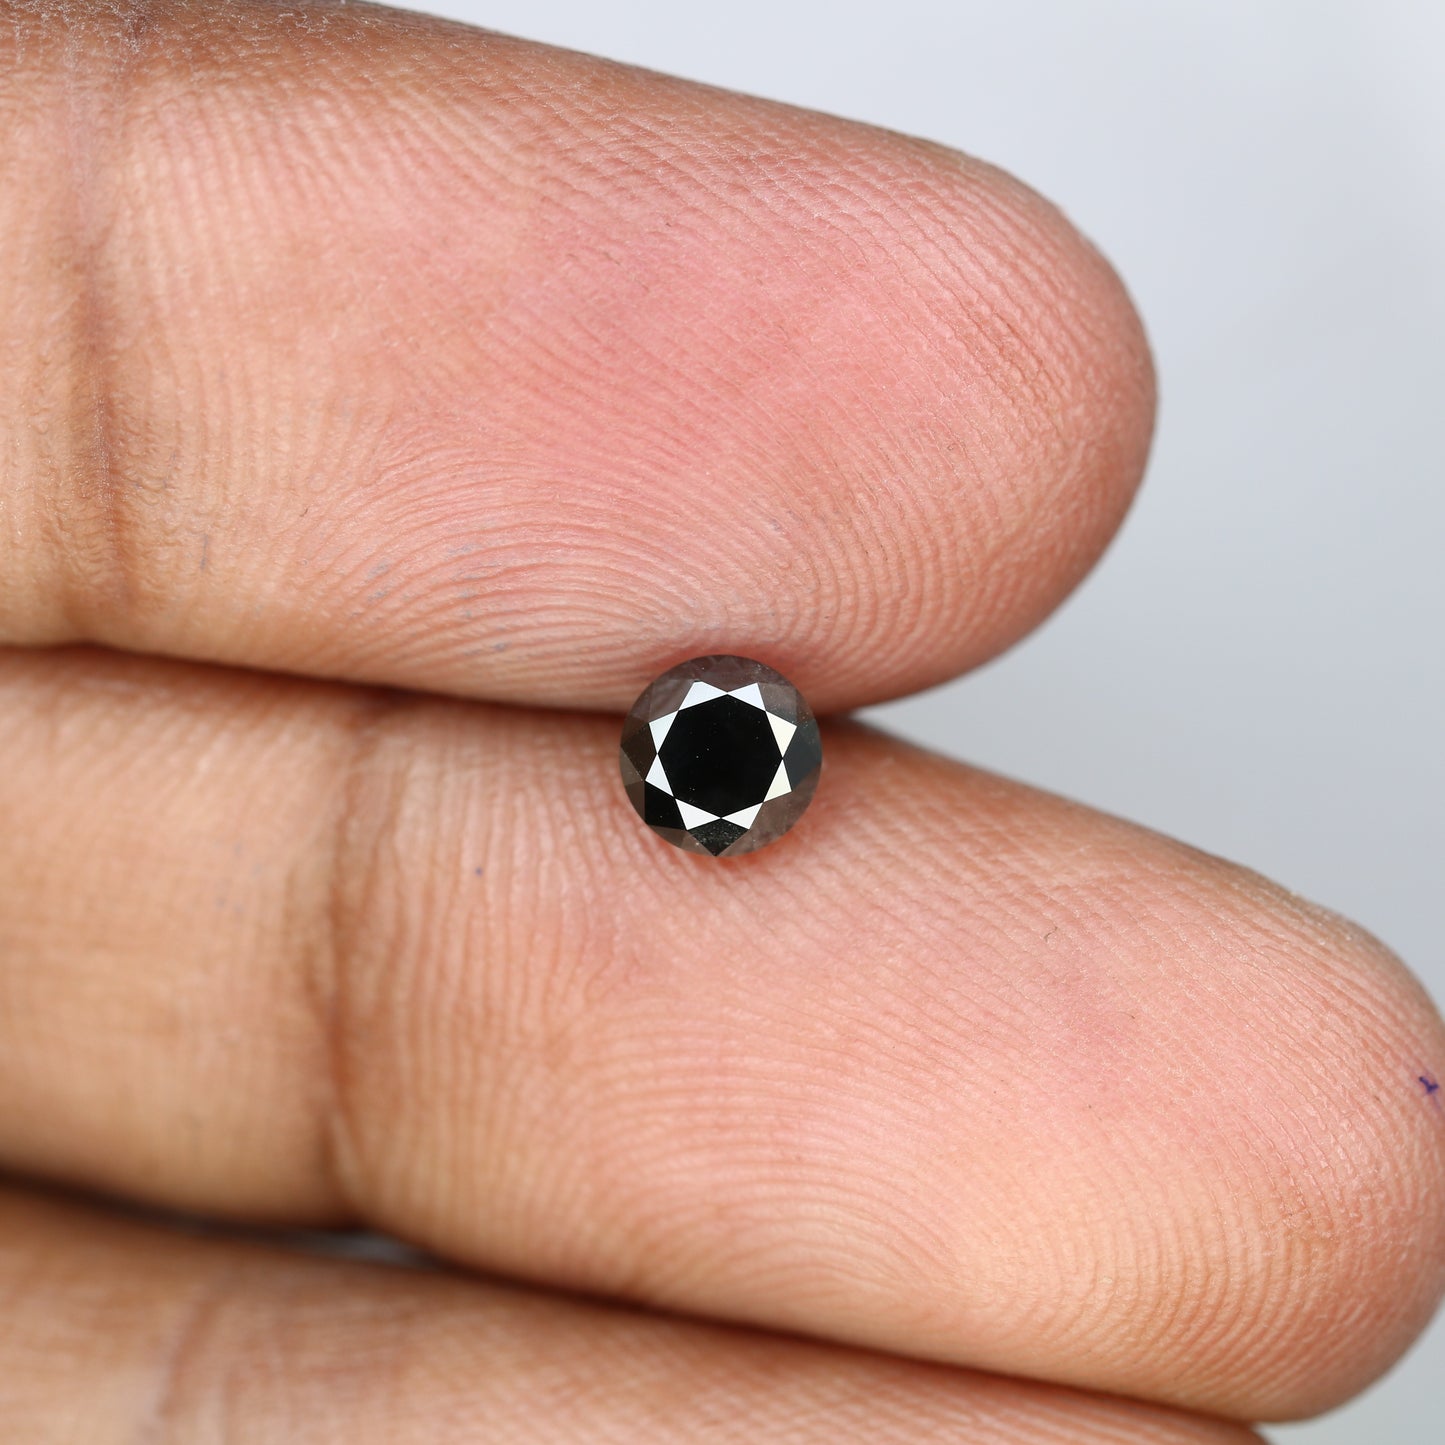 0.68 CT 5.10 MM Black Round Brilliant Cut Loose Diamond For Wedding Ring